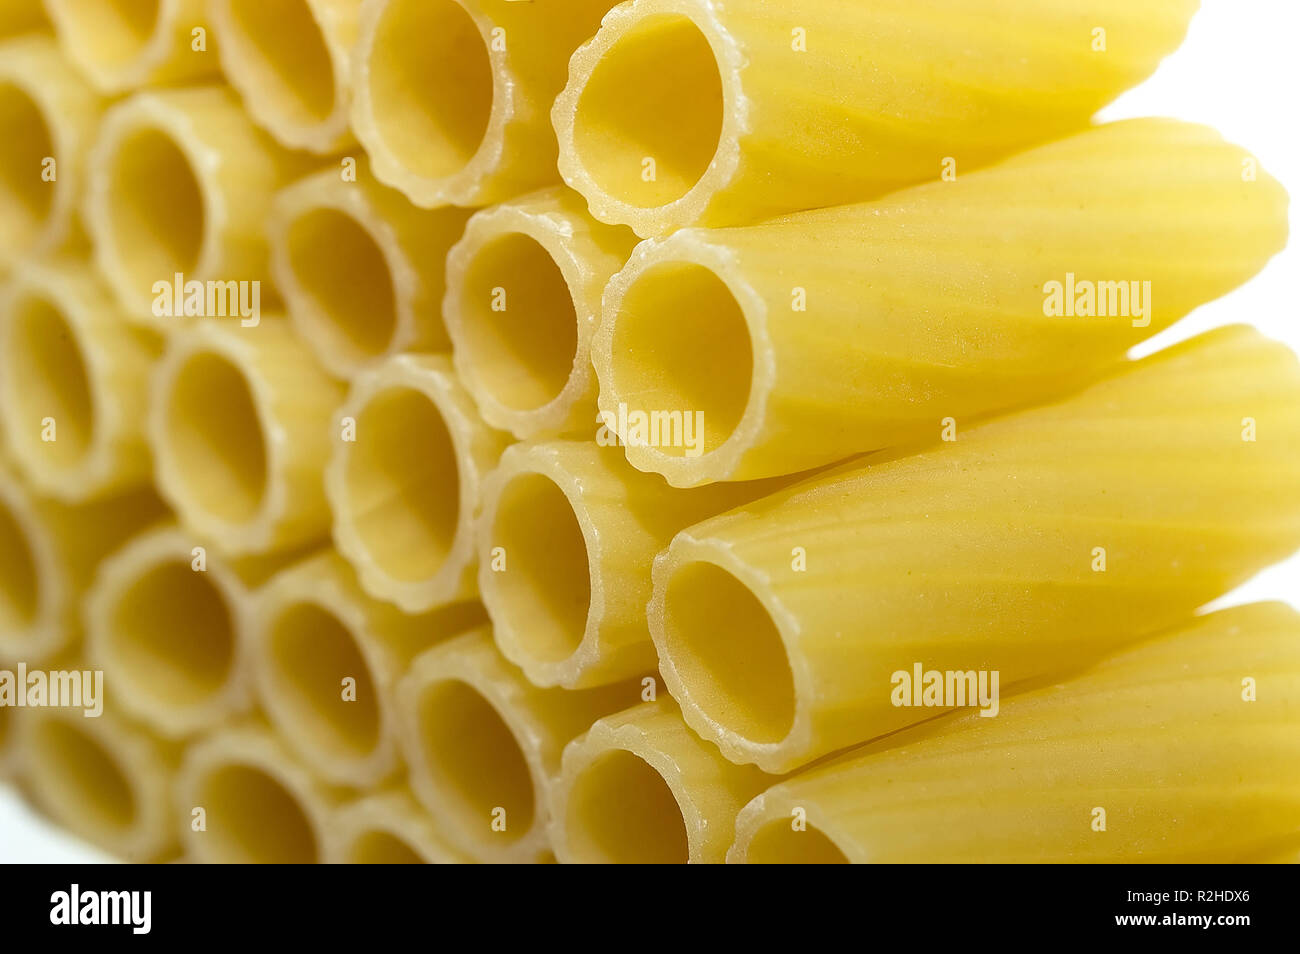 Fideos hoyos fotografías e imágenes de alta resolución - Alamy